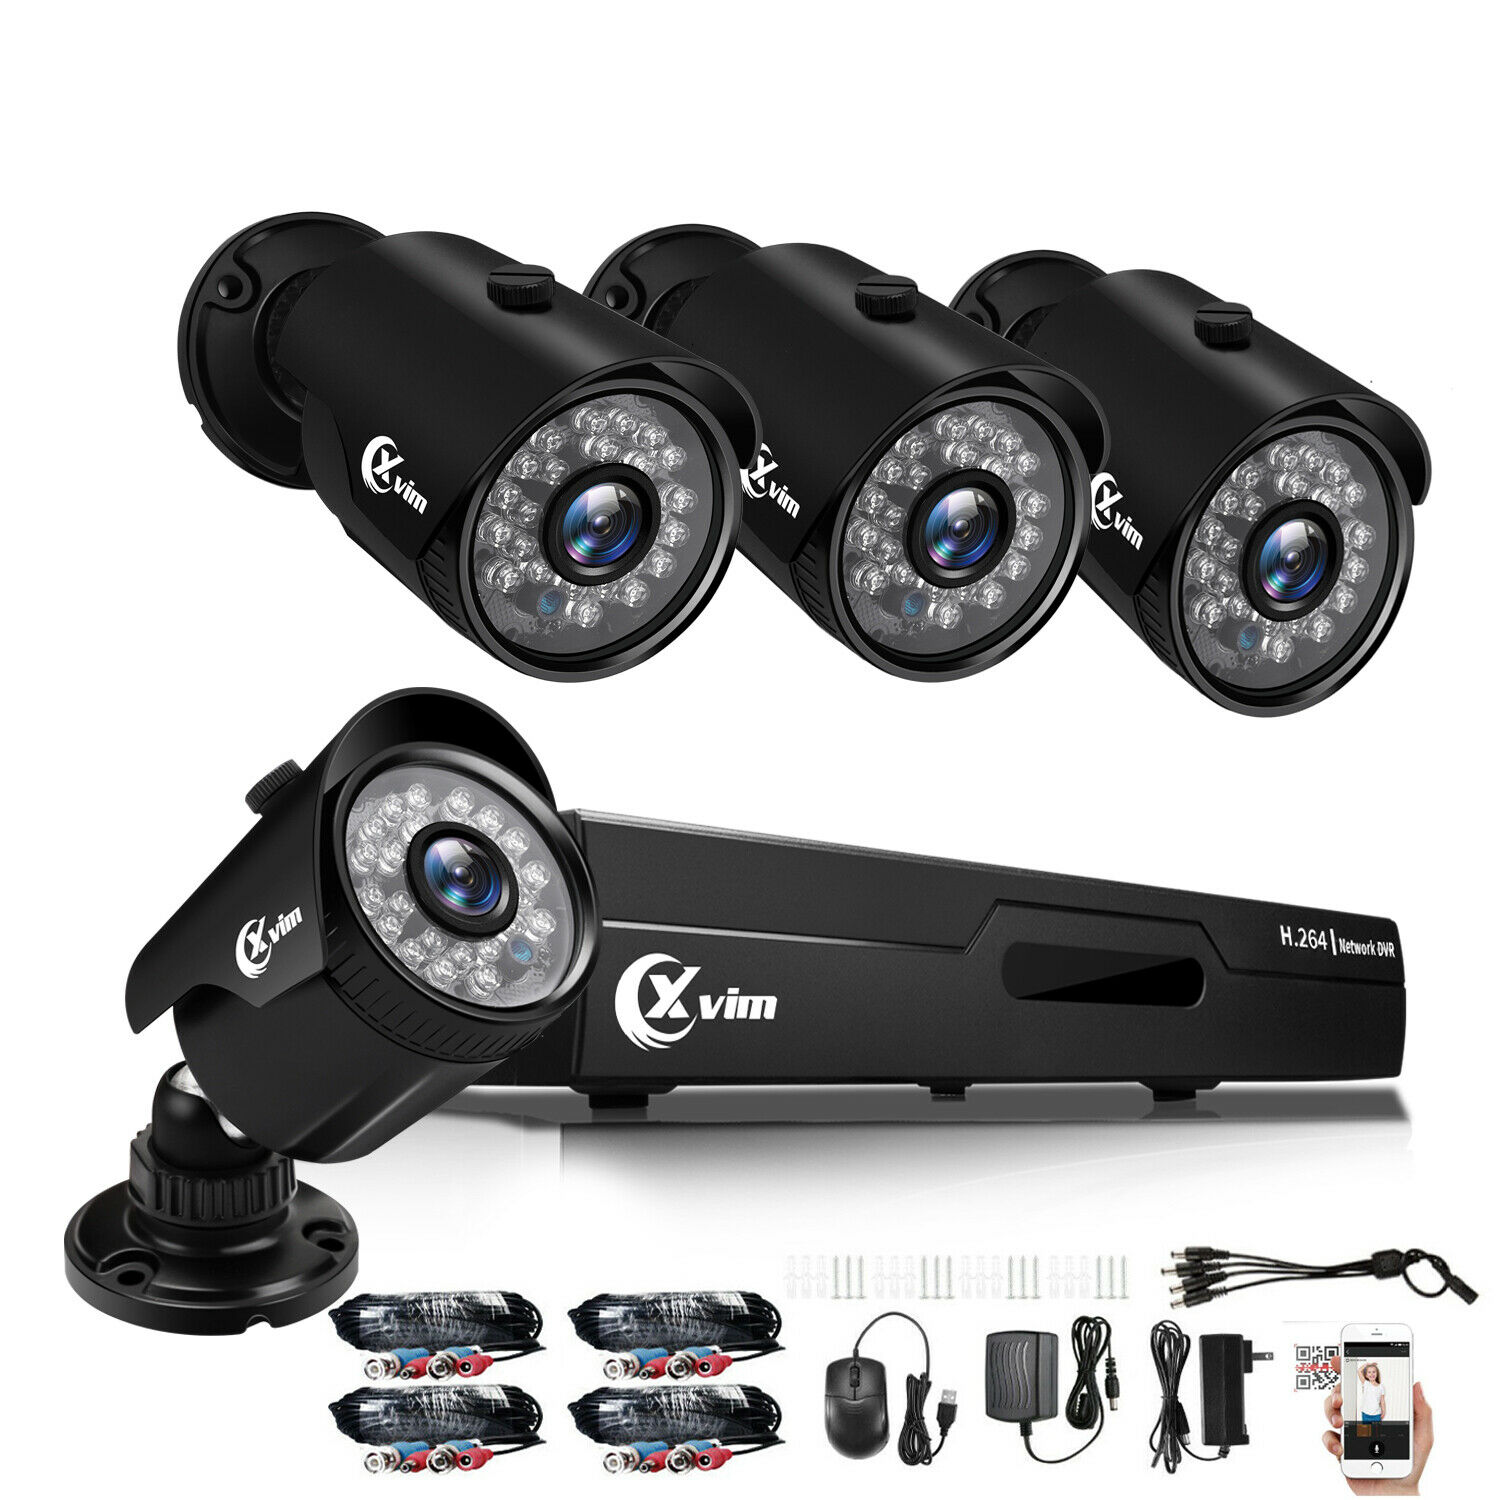 Xvim 5in1 4ch 1080p Dvr 1920tvl Ir Night Vision Home Security Camera System